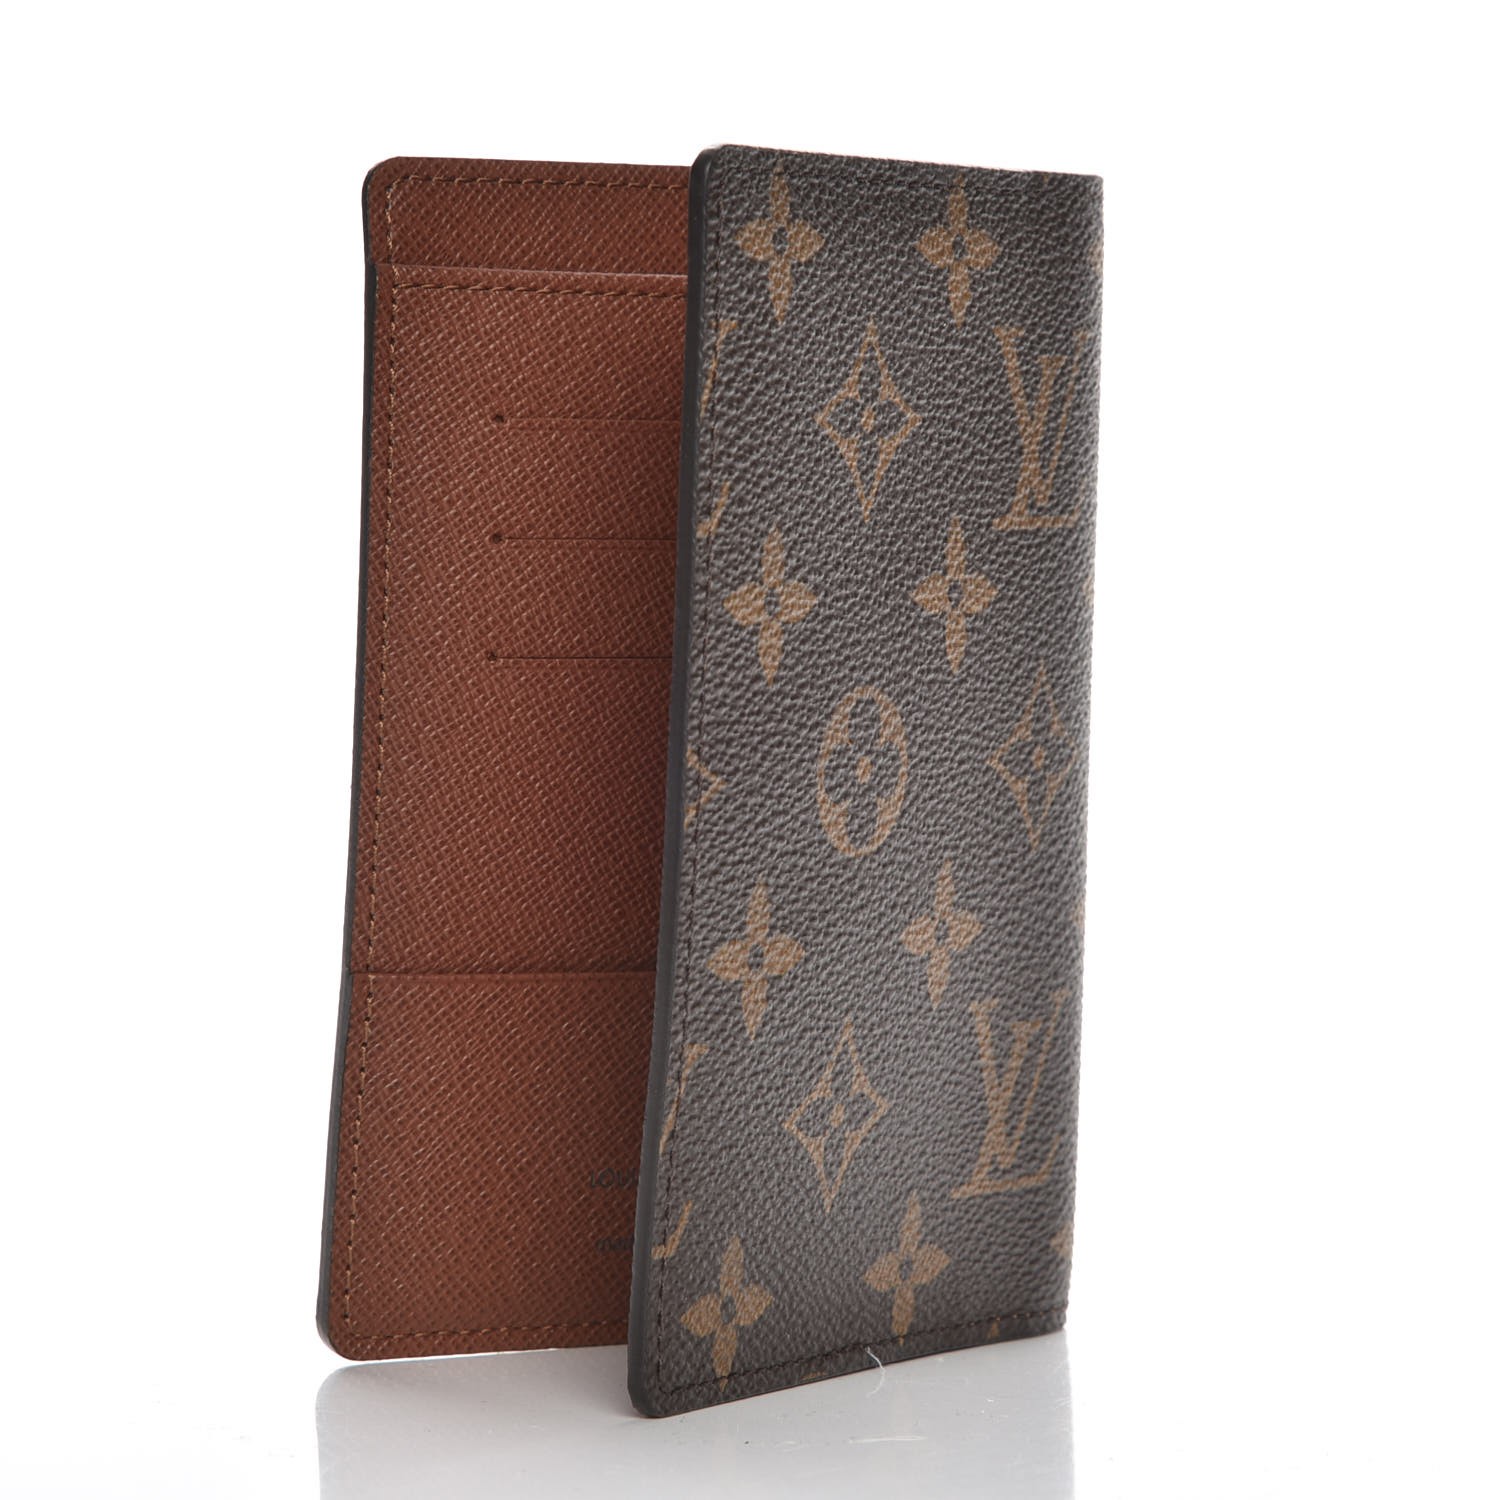 Shop Louis Vuitton DAMIER GRAPHITE Passport cover (N64411) by